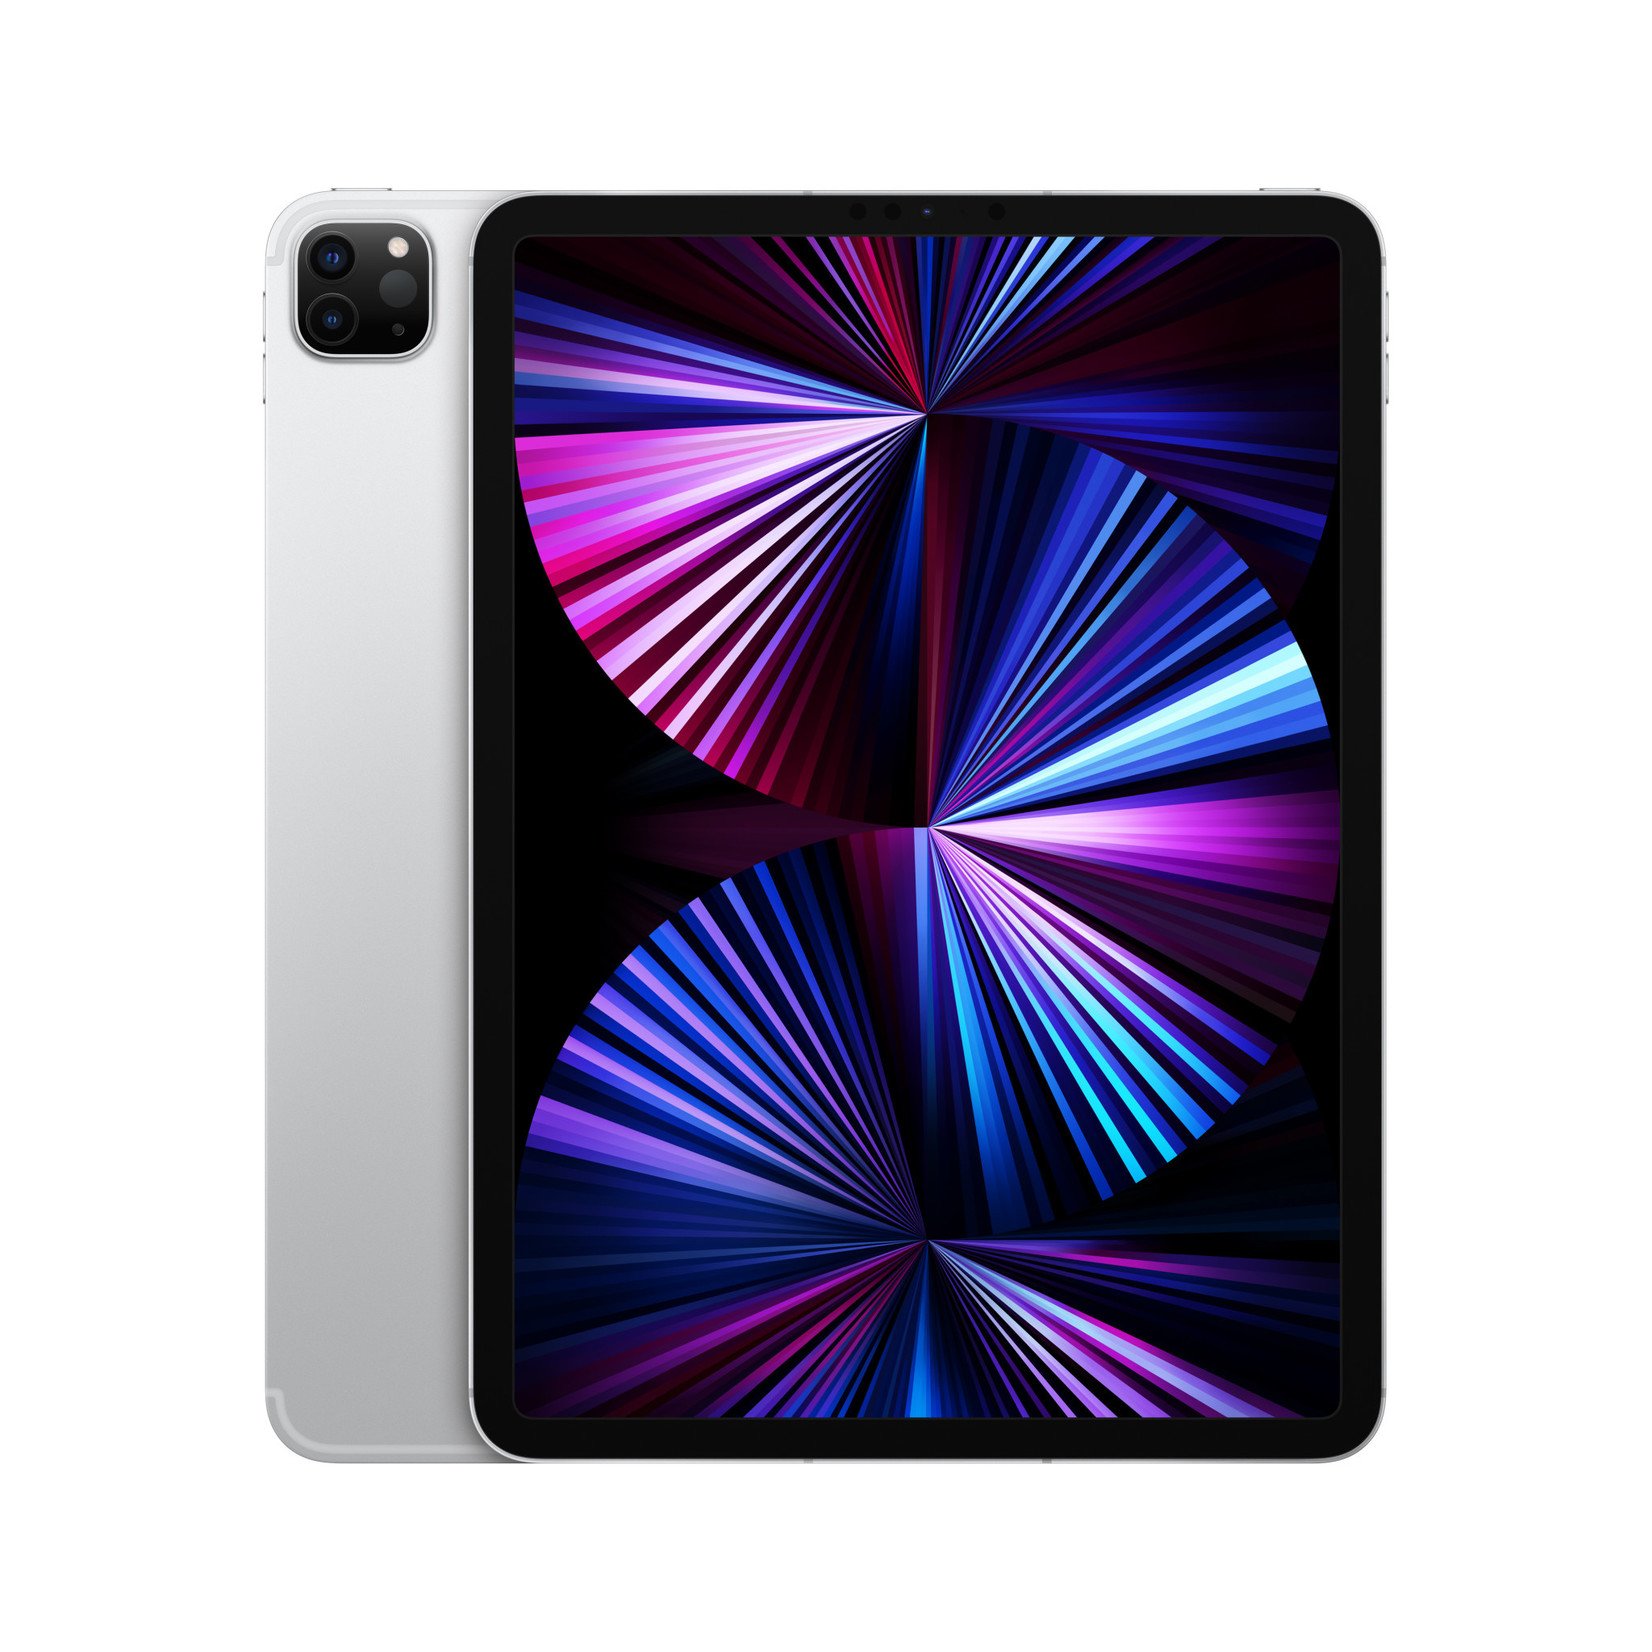 Apple 11-inch iPad Pro Wi-Fi + Cellular